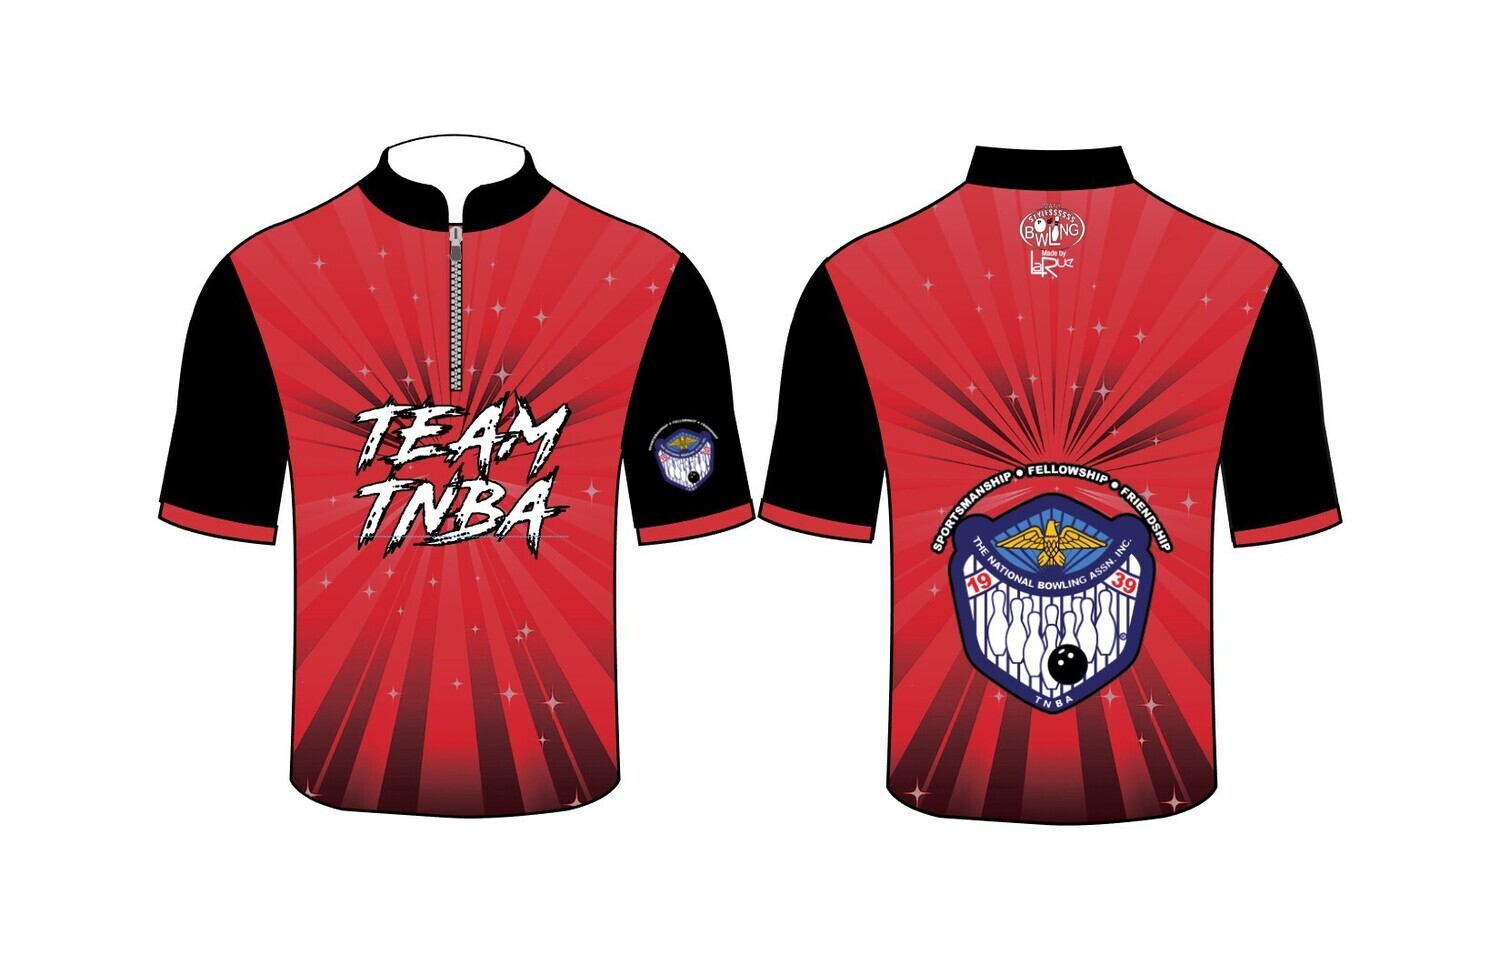 Team Tnba Red & Black